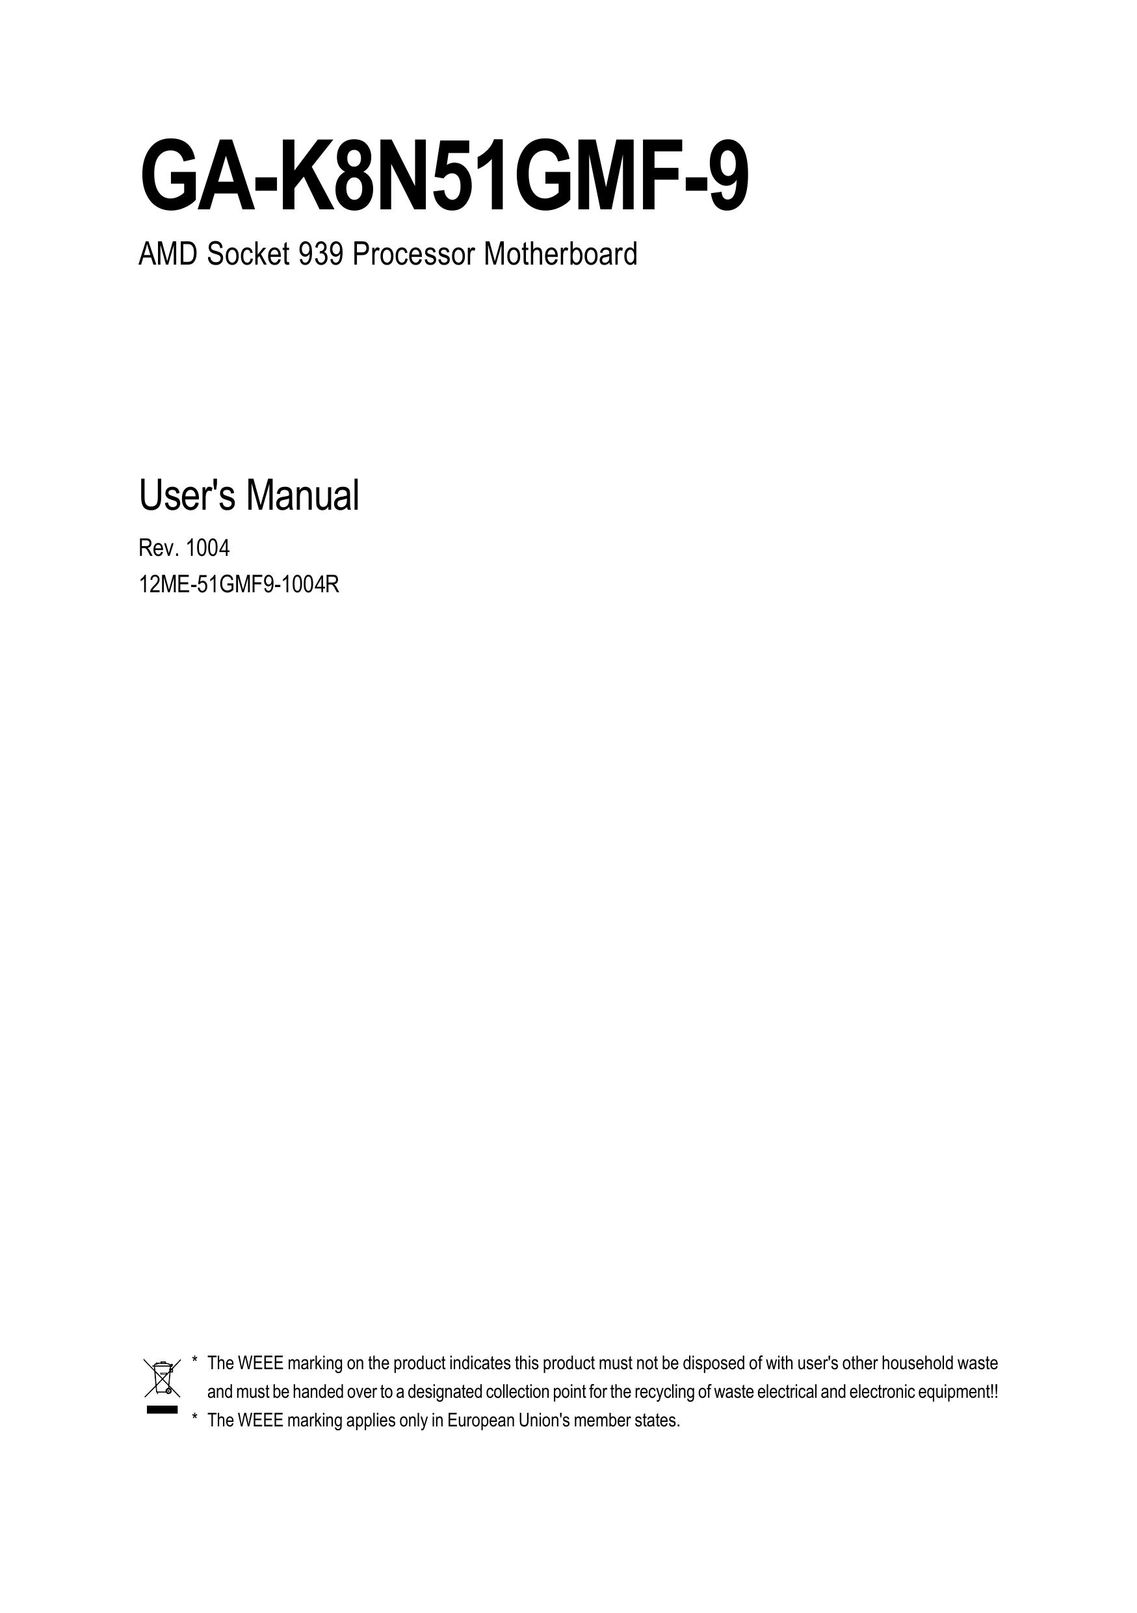 AMD GA-K8N51GMF-9 Computer Hardware User Manual